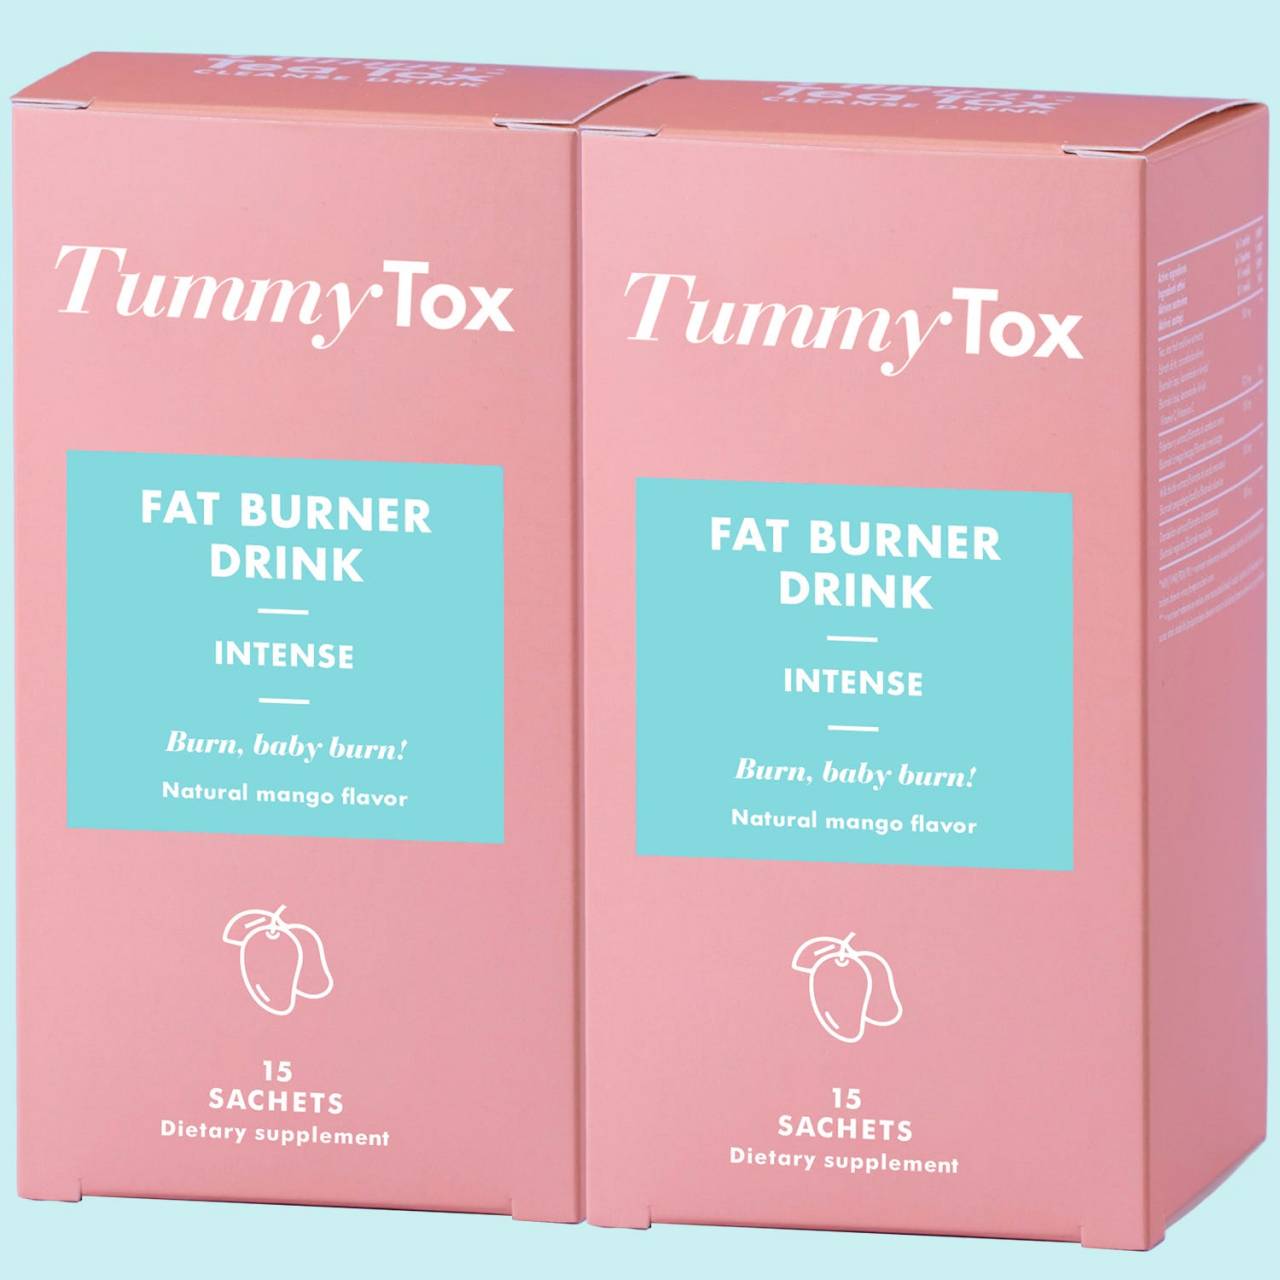 Fat Burner Drink Tummy Tox 1+1 GRATIS.